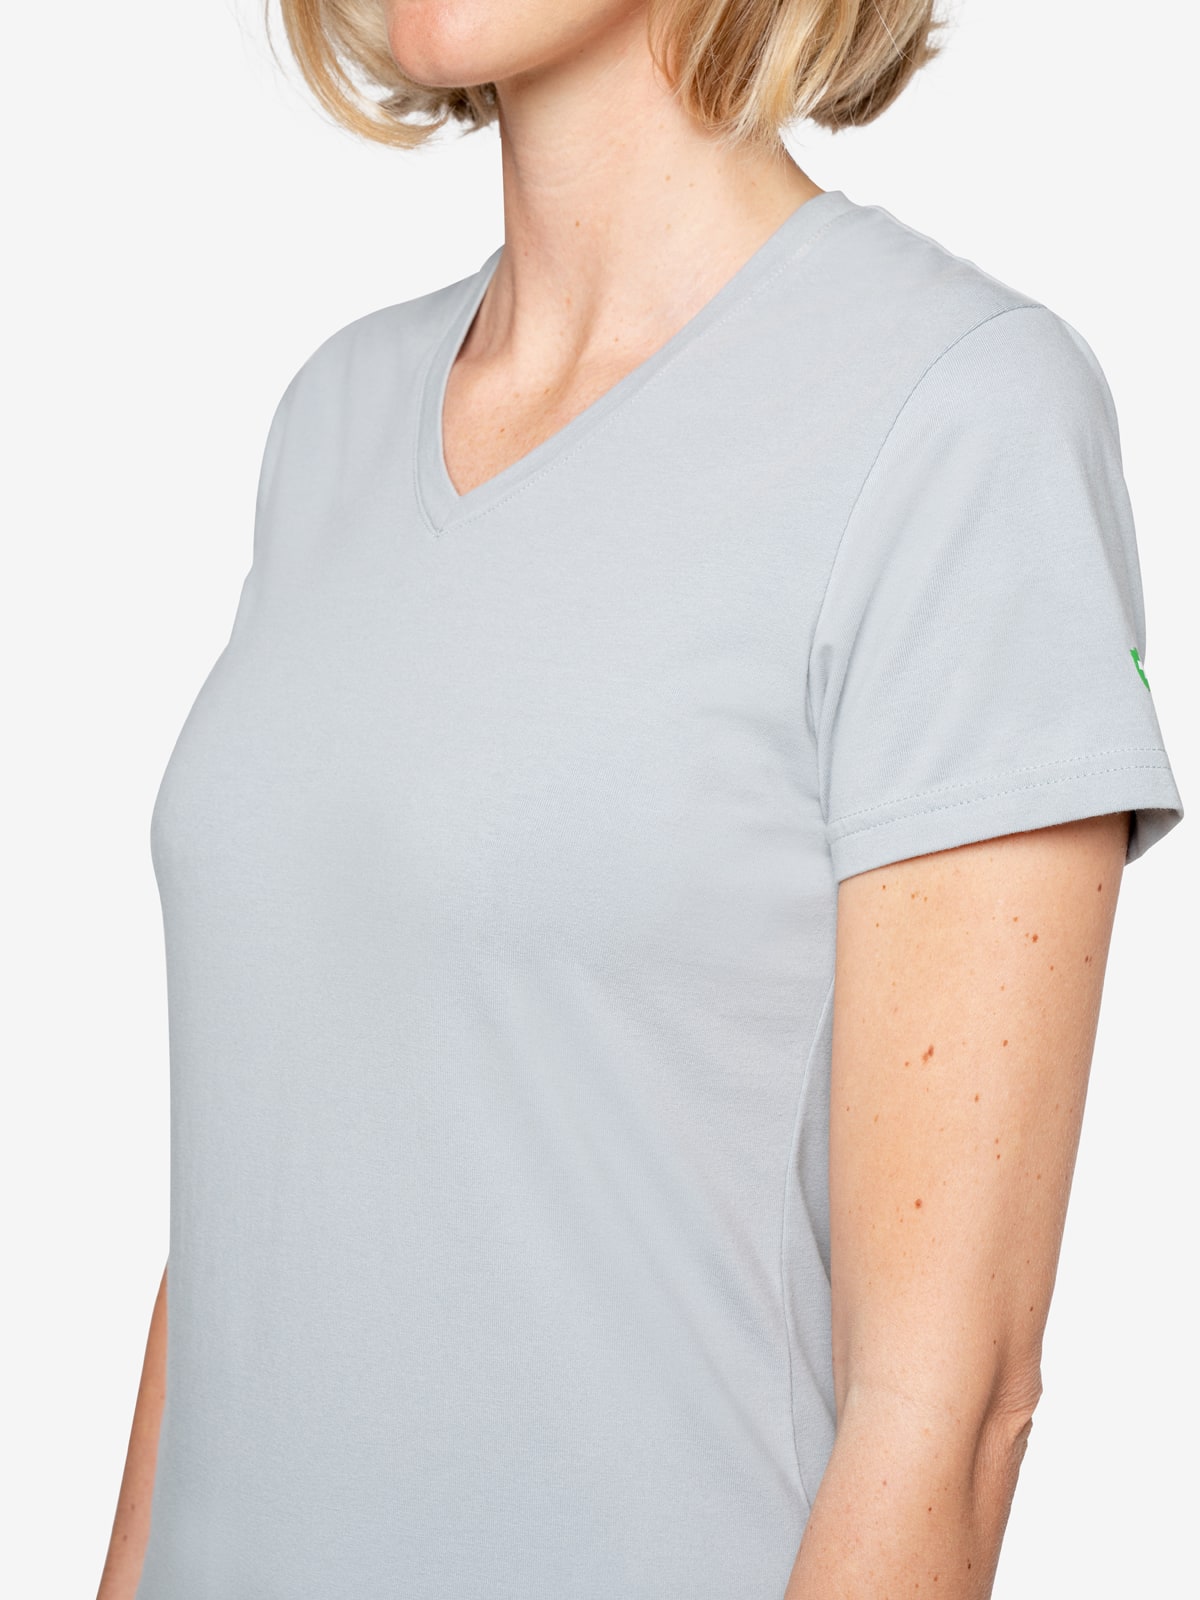 Insect Shield Women's UPF Dri-Balance Short Sleeve V-Neck T-Shirt